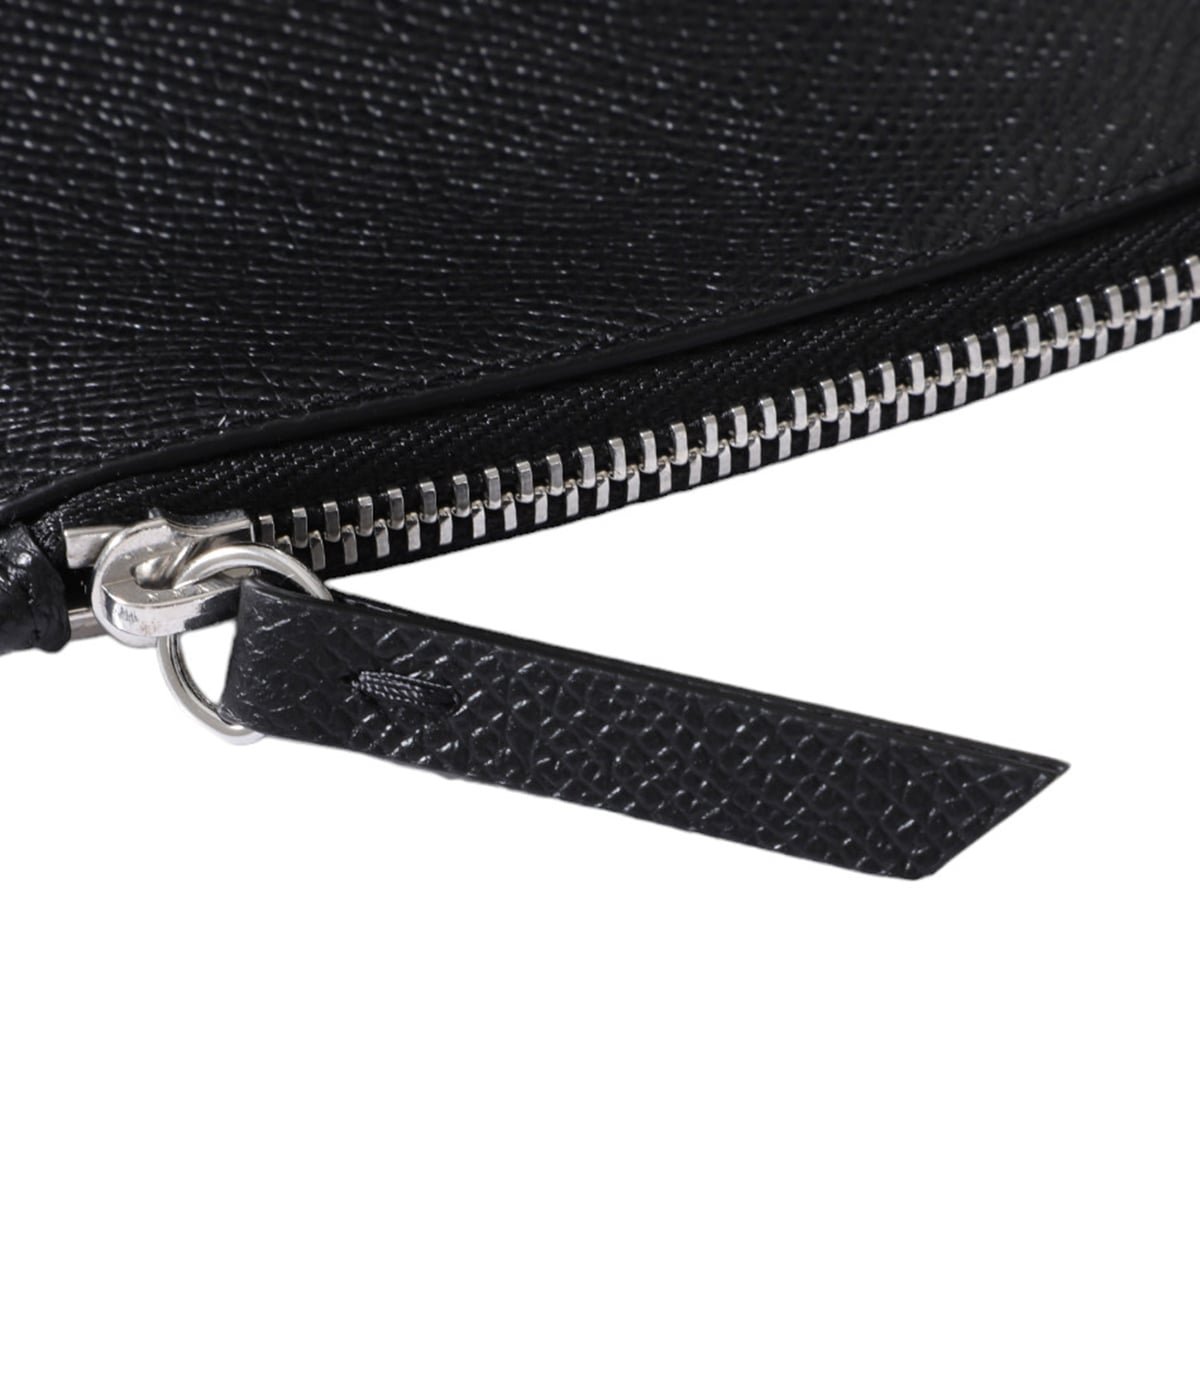 Small Flip flap wallet | Maison Margiela(メゾン マルジェラ 